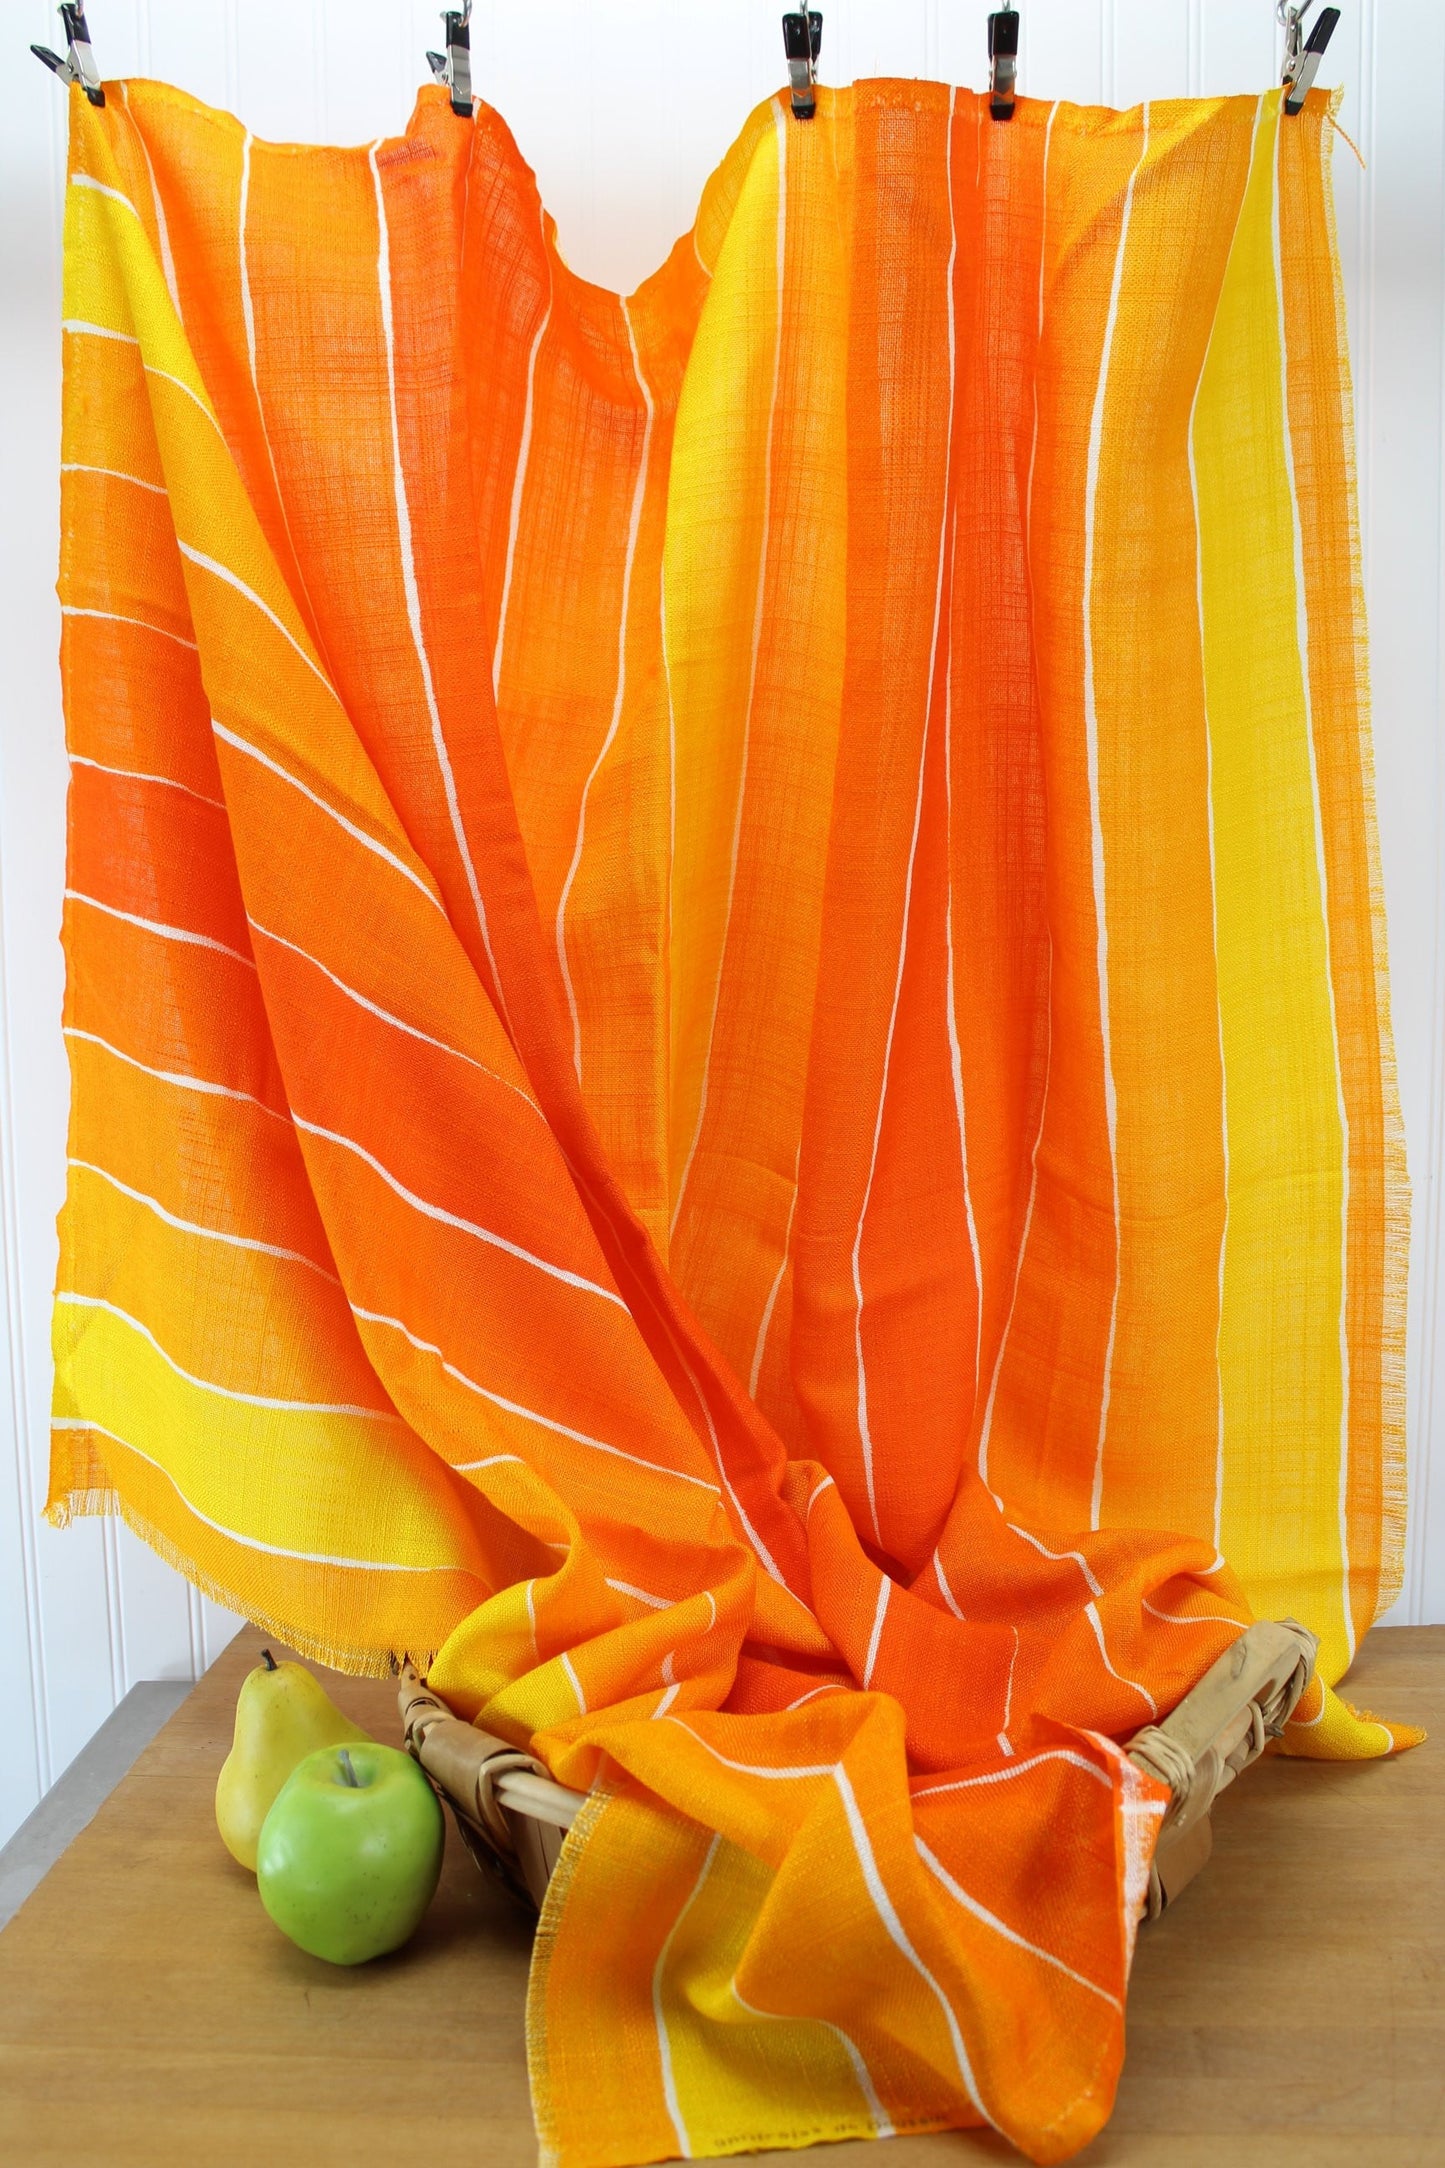 Boussac Antifroiss Fabric Stripe Orange Yellow Heavy Weave 2 Yards X 45" DIY Decor pierre frey